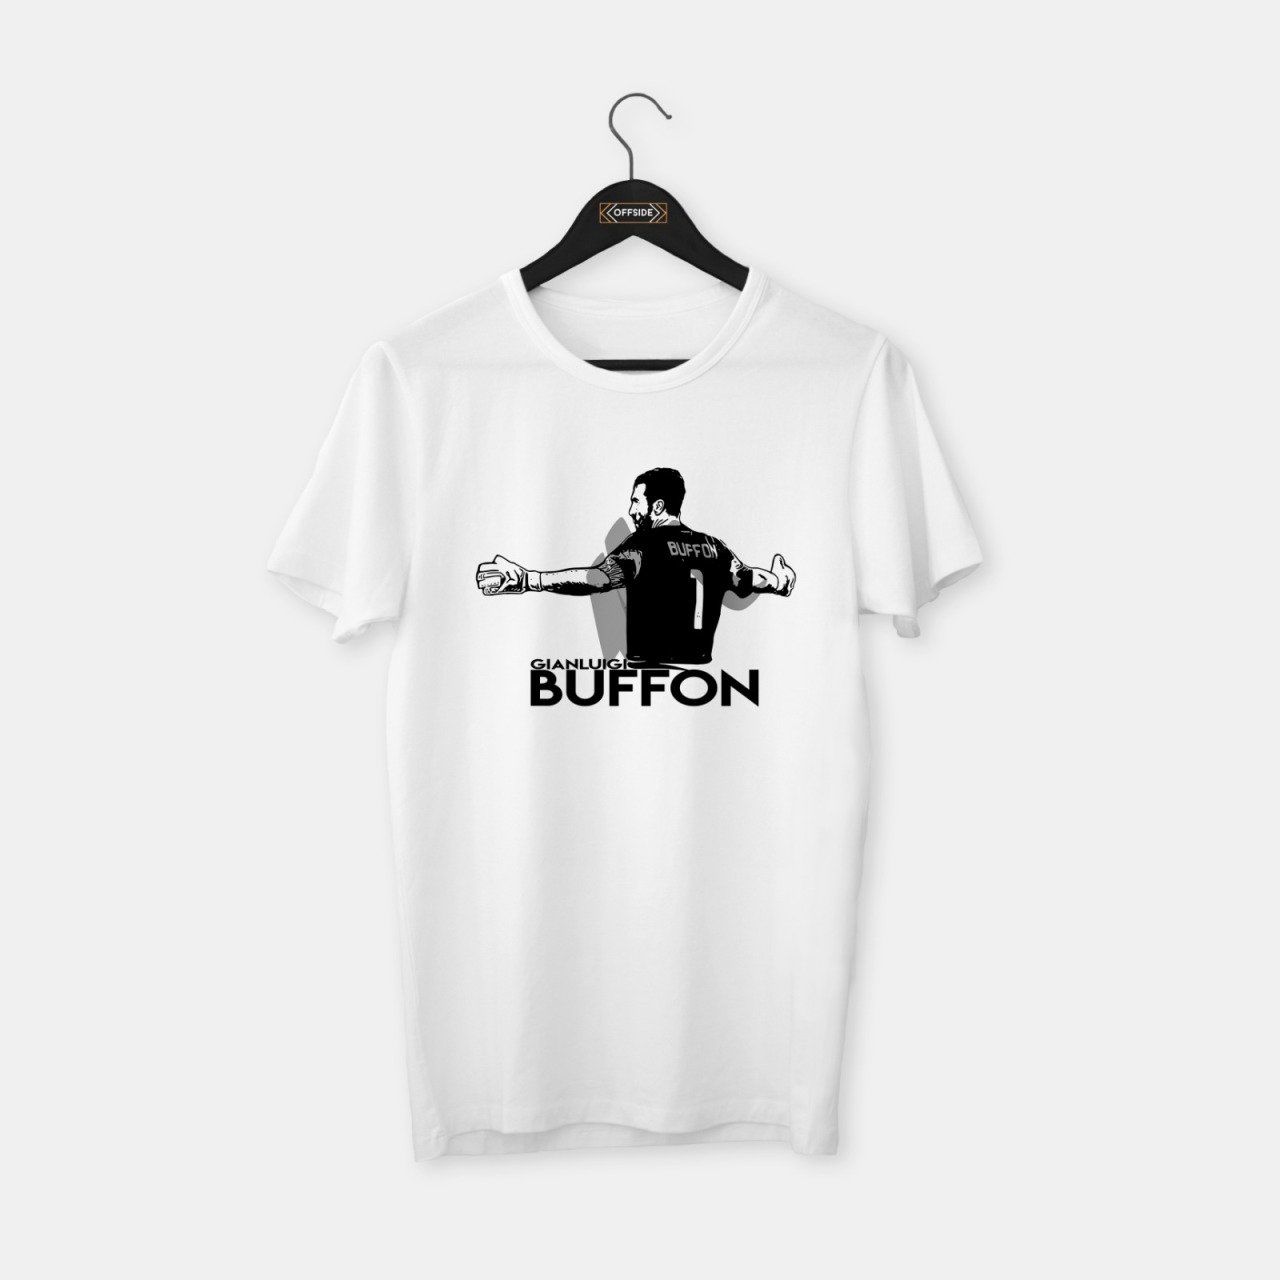 Buffon T-shirt